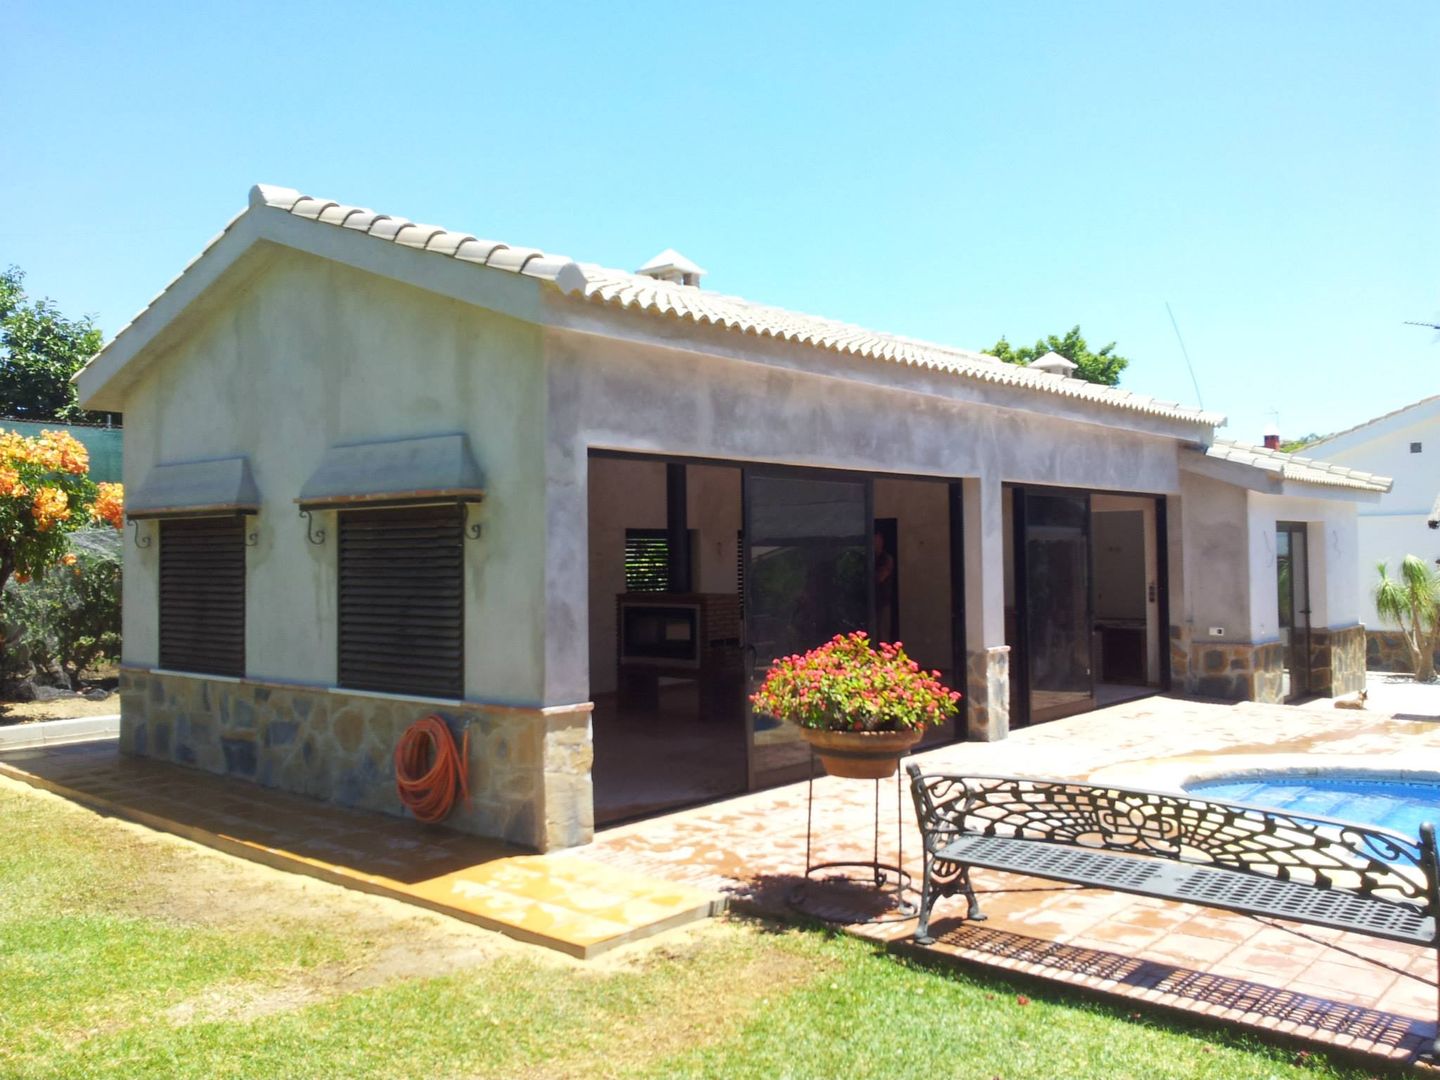 Casa de piscina - La Sierrezuela, gsformato gsformato منازل